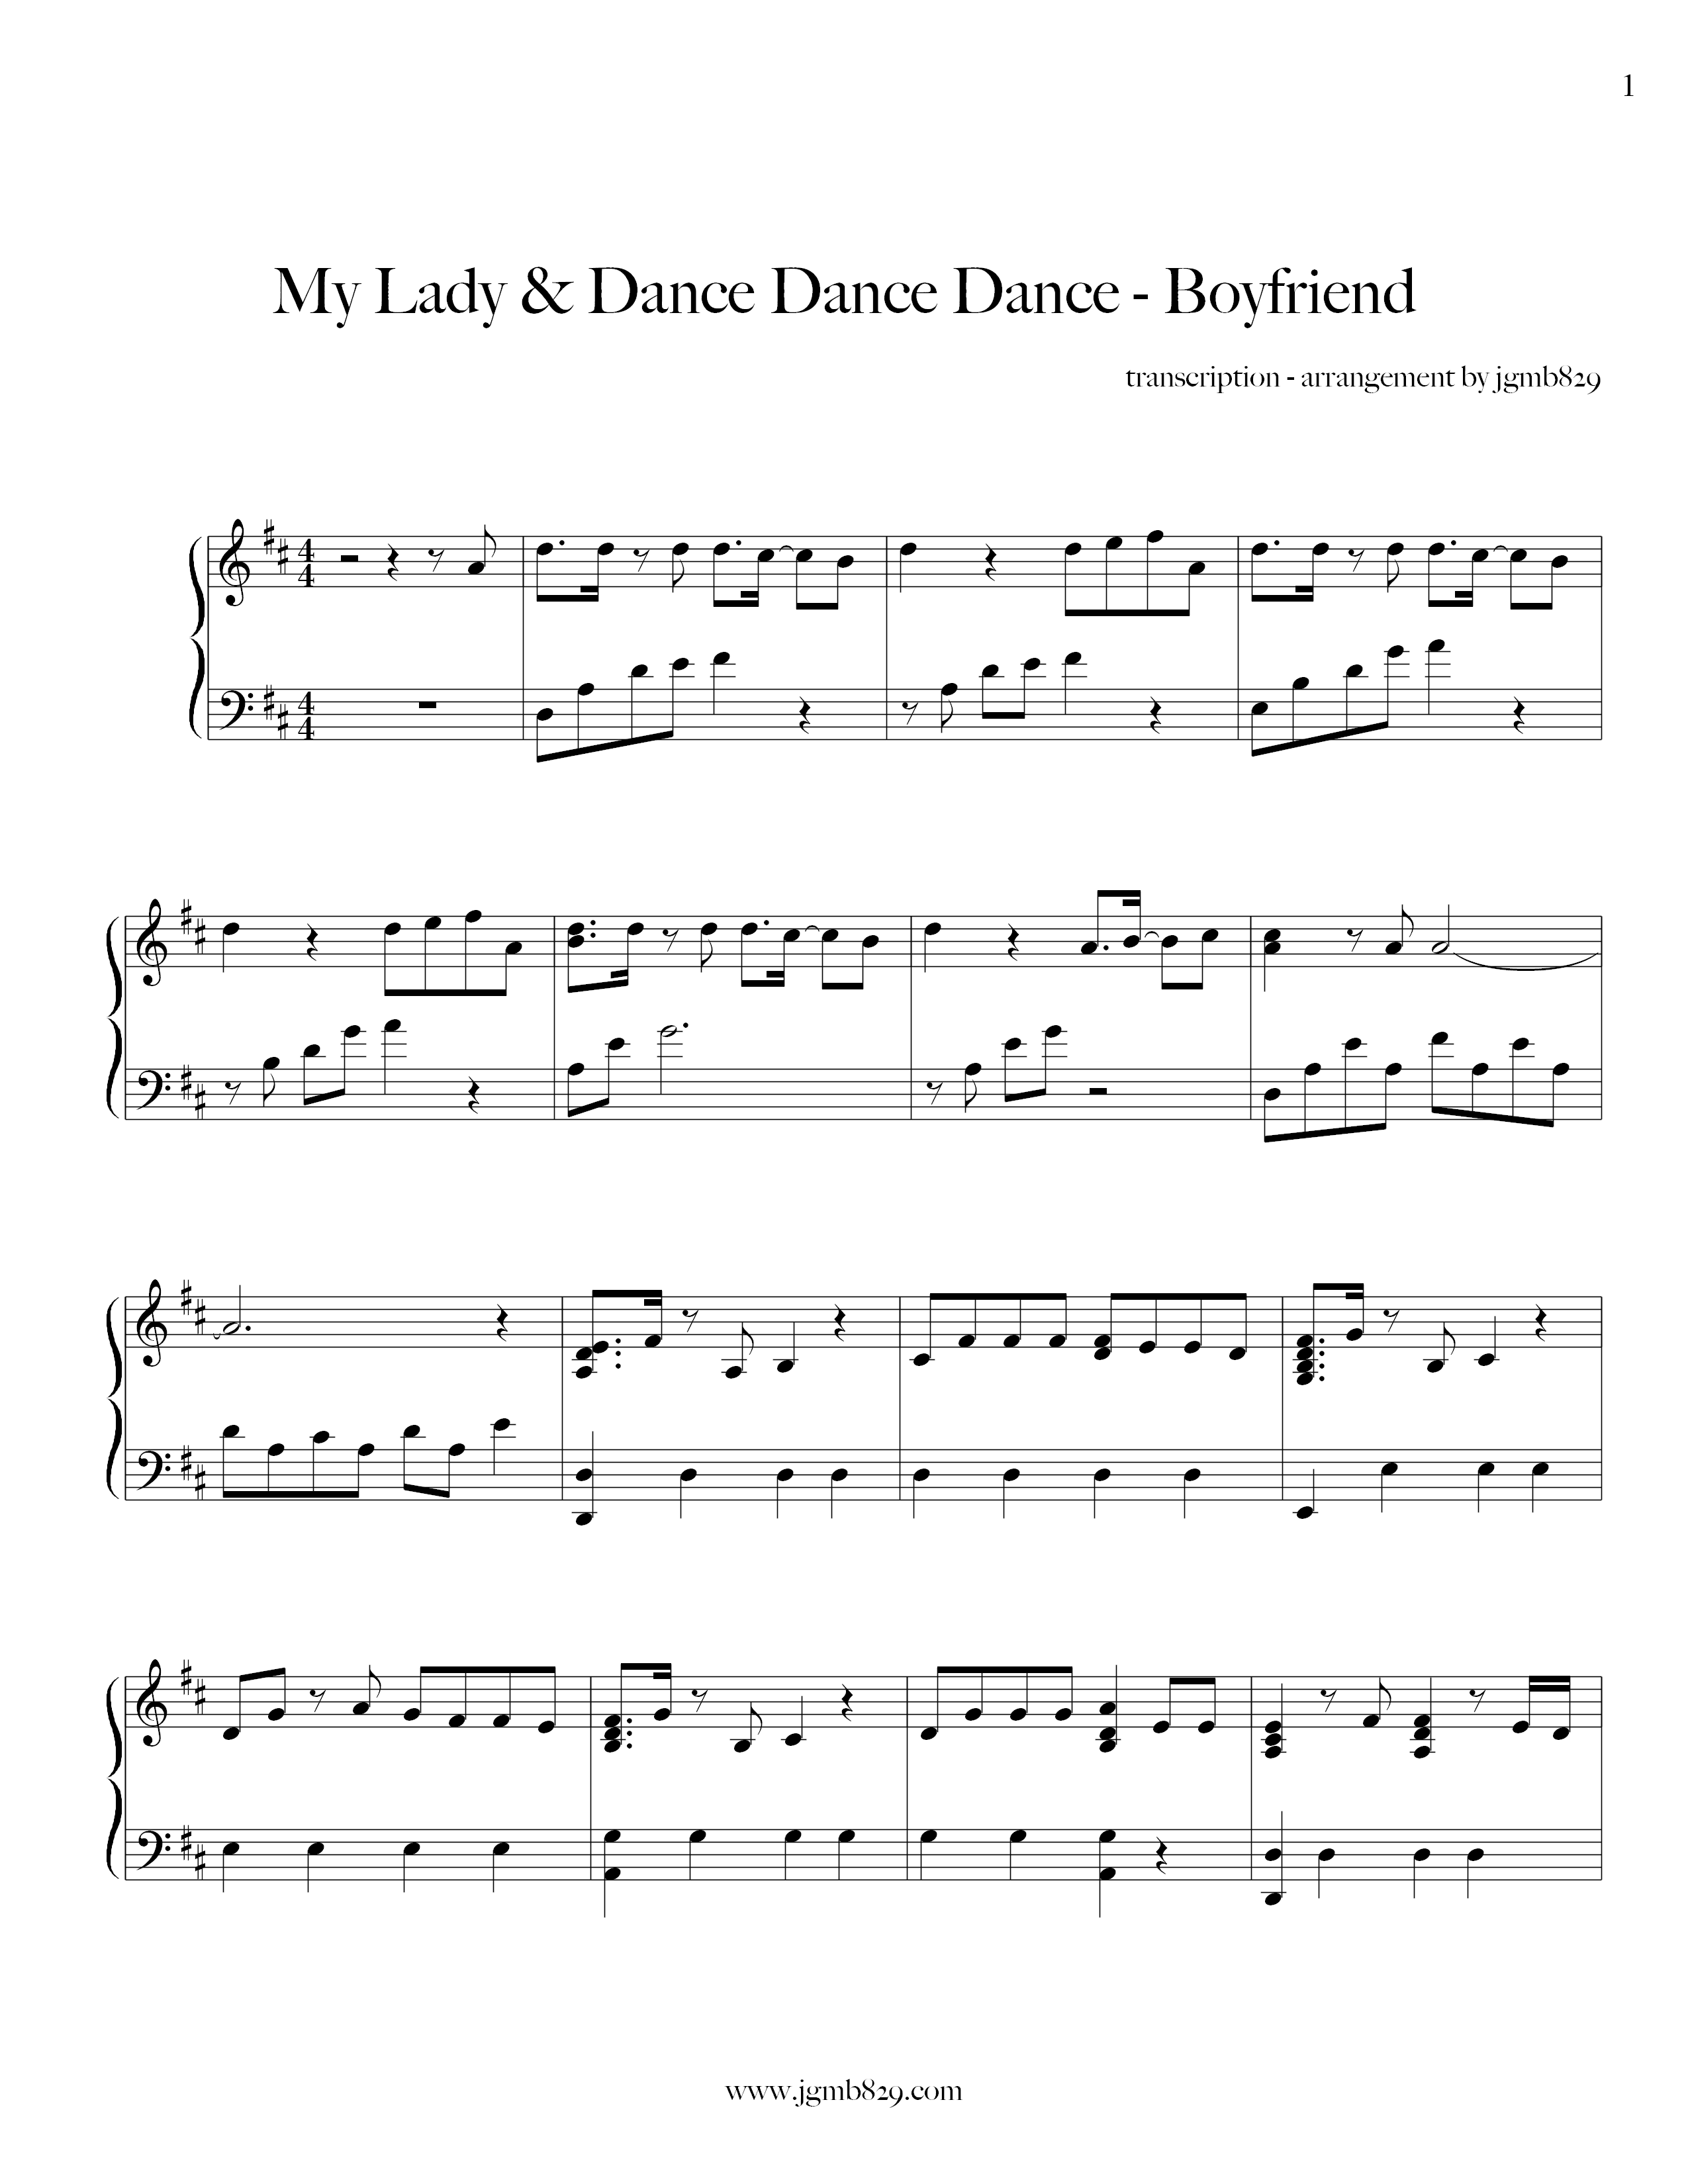 My Lady & Dance Dance Dance Score